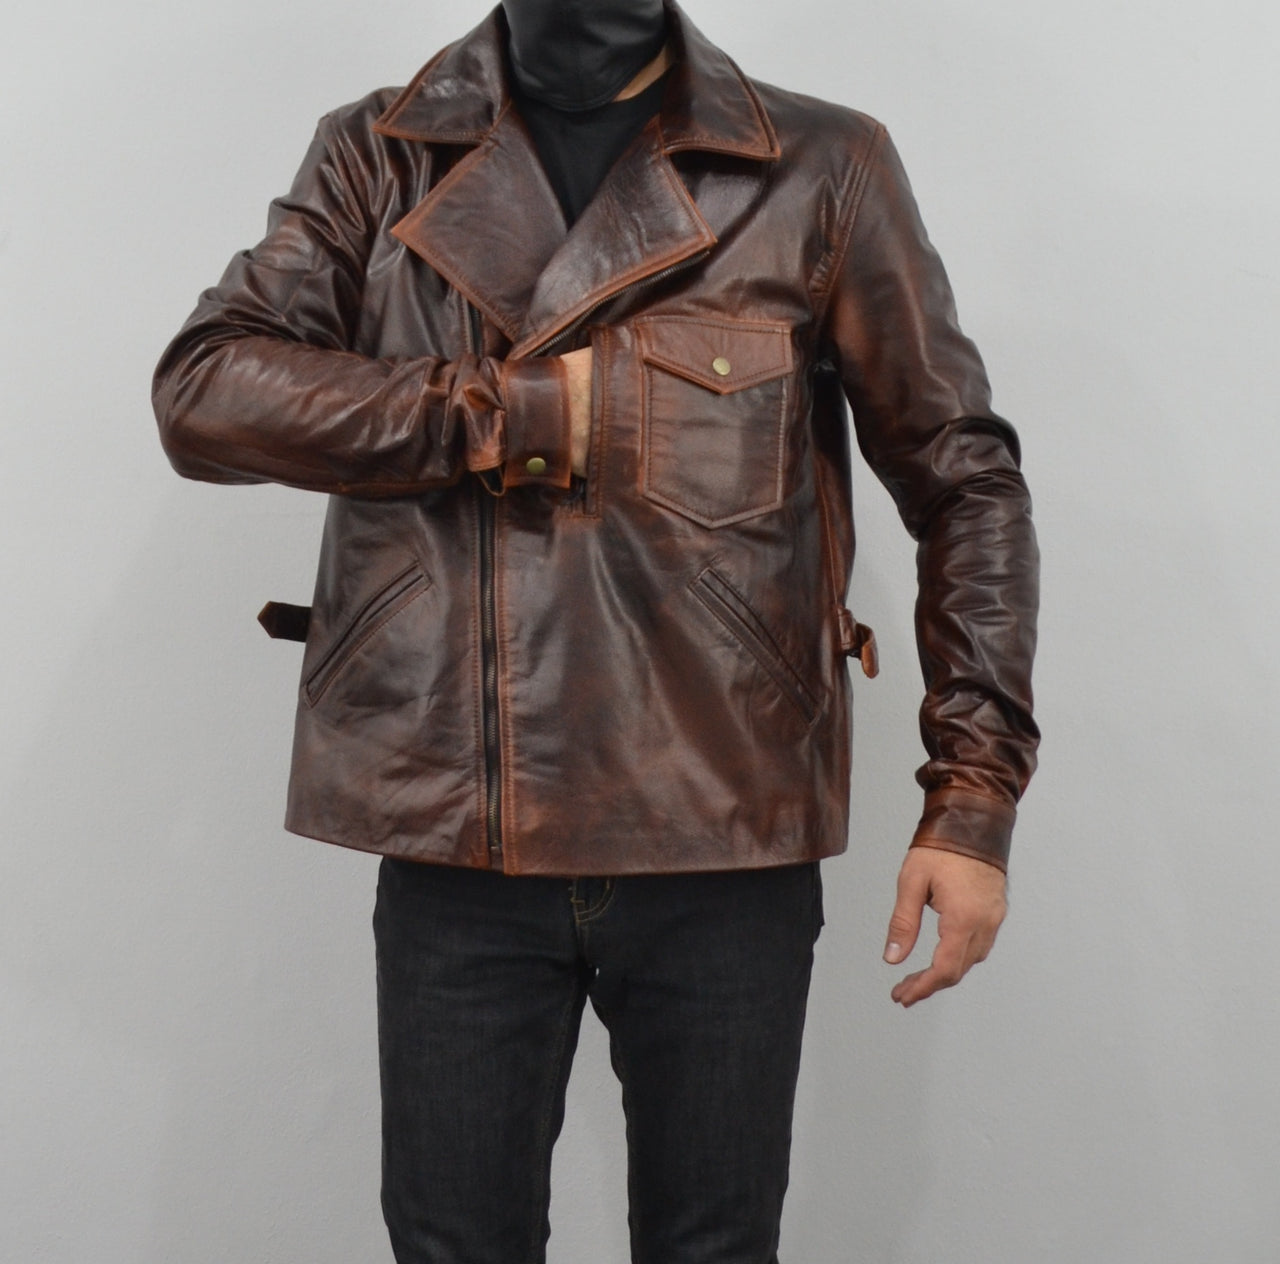 Escape From New York Snake Plissken Antique Brown Biker Leather Jacket